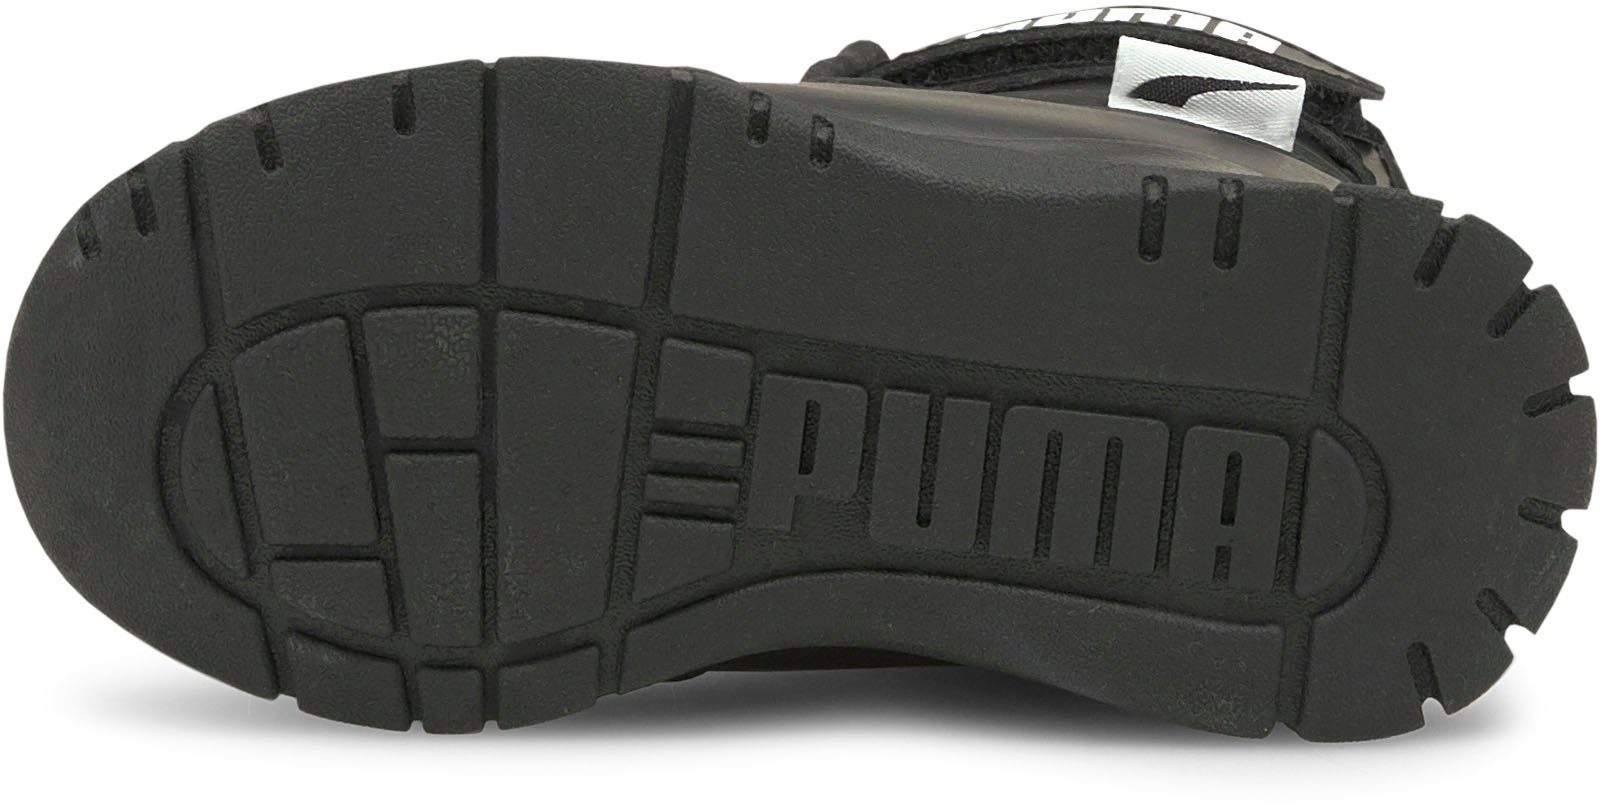 Puma NIEVE BOOT mit Black-Puma PUMA AC White INF Sneaker Klettverschluss WTR